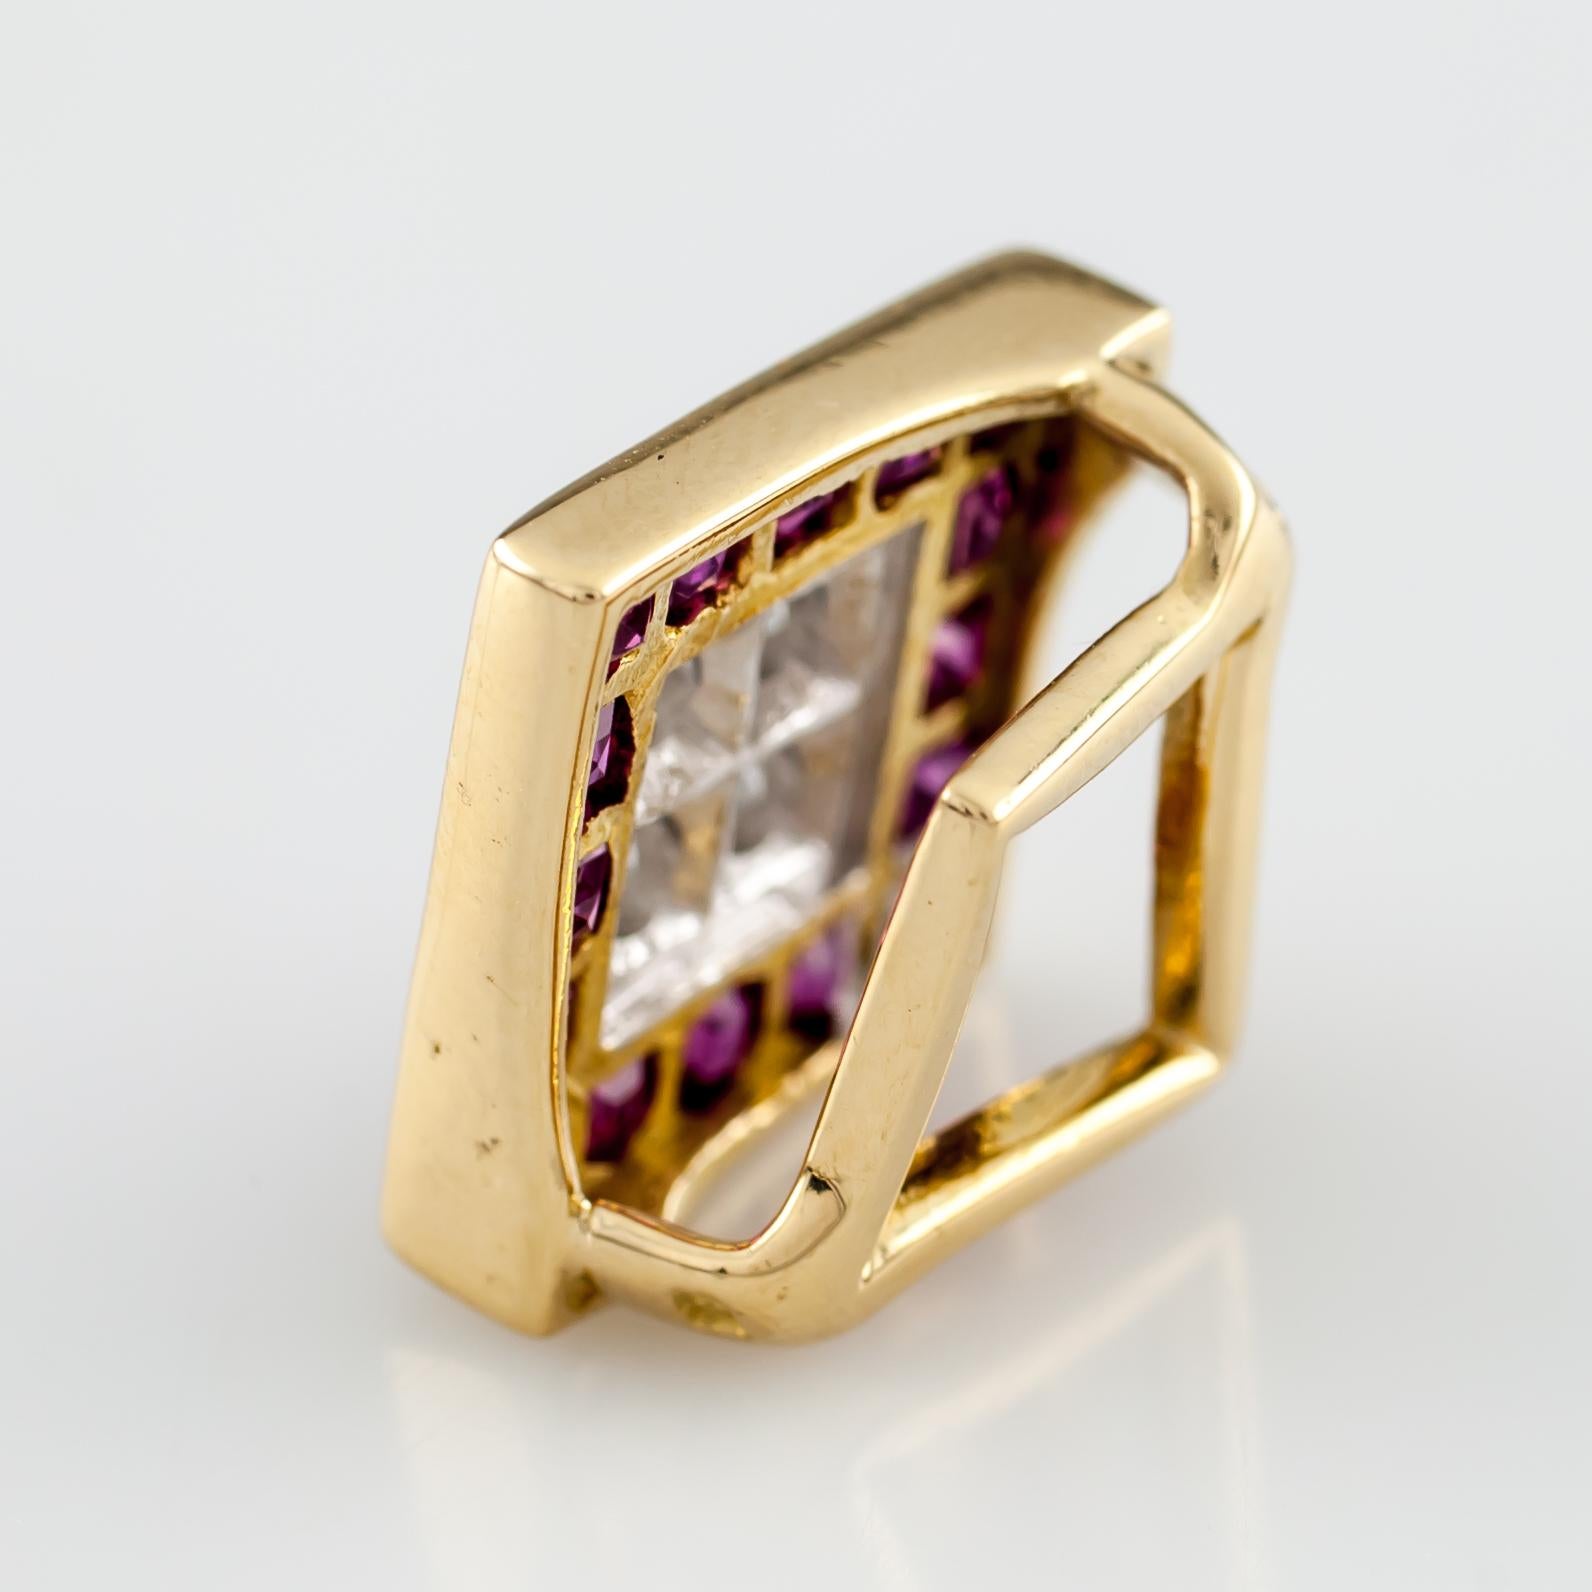 Women's 5.75 carat Ruby & 1.35 carat Diamond 18k Yellow Gold Earring and Pendant Set For Sale